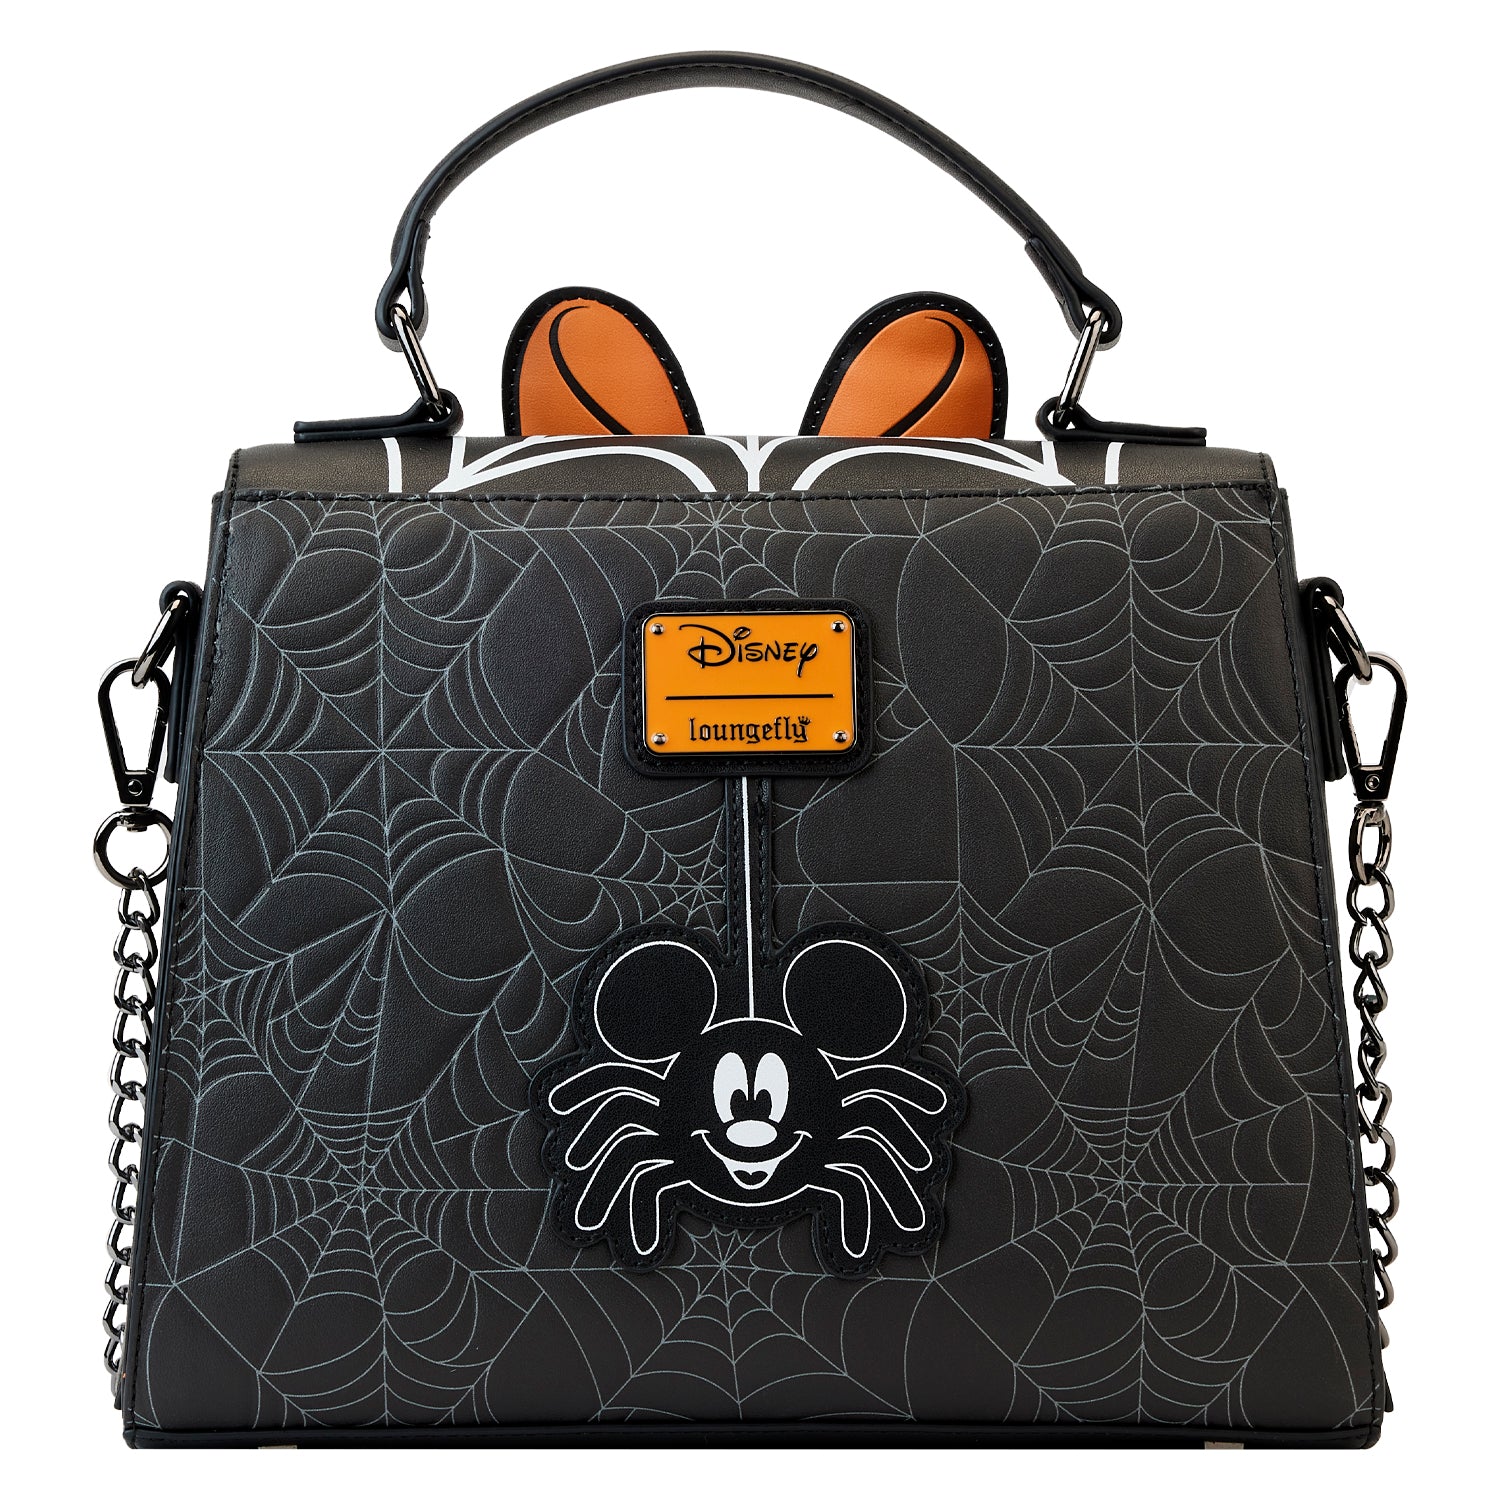 Disney Bag, Crossbody, Round, Snow White Poison Apple Glow in the Dark  Applique, Black Sequin, Vegan Leather: Handbags: Amazon.com